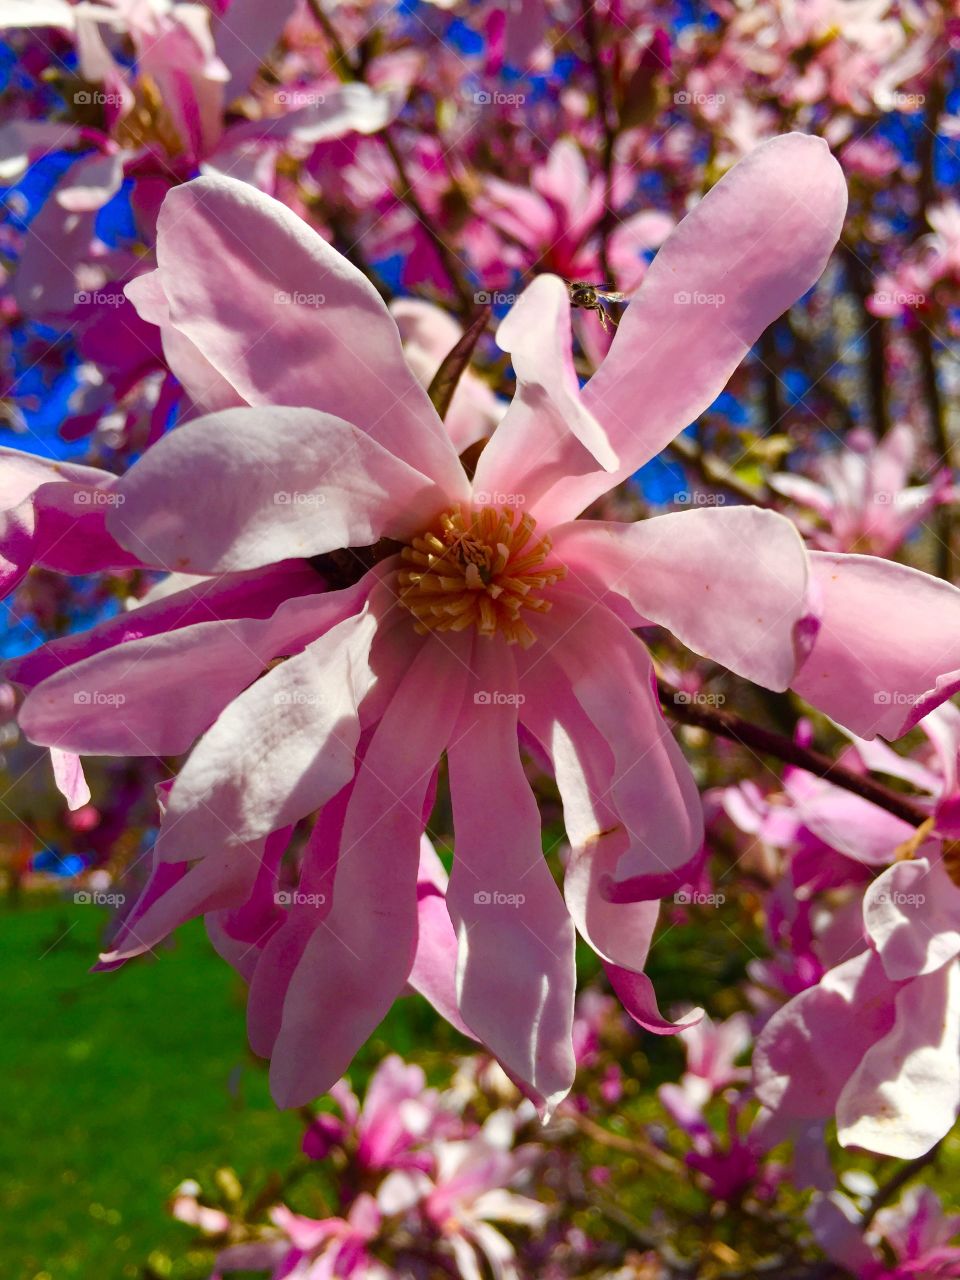 Pretty spring day ! Gorgeous flower